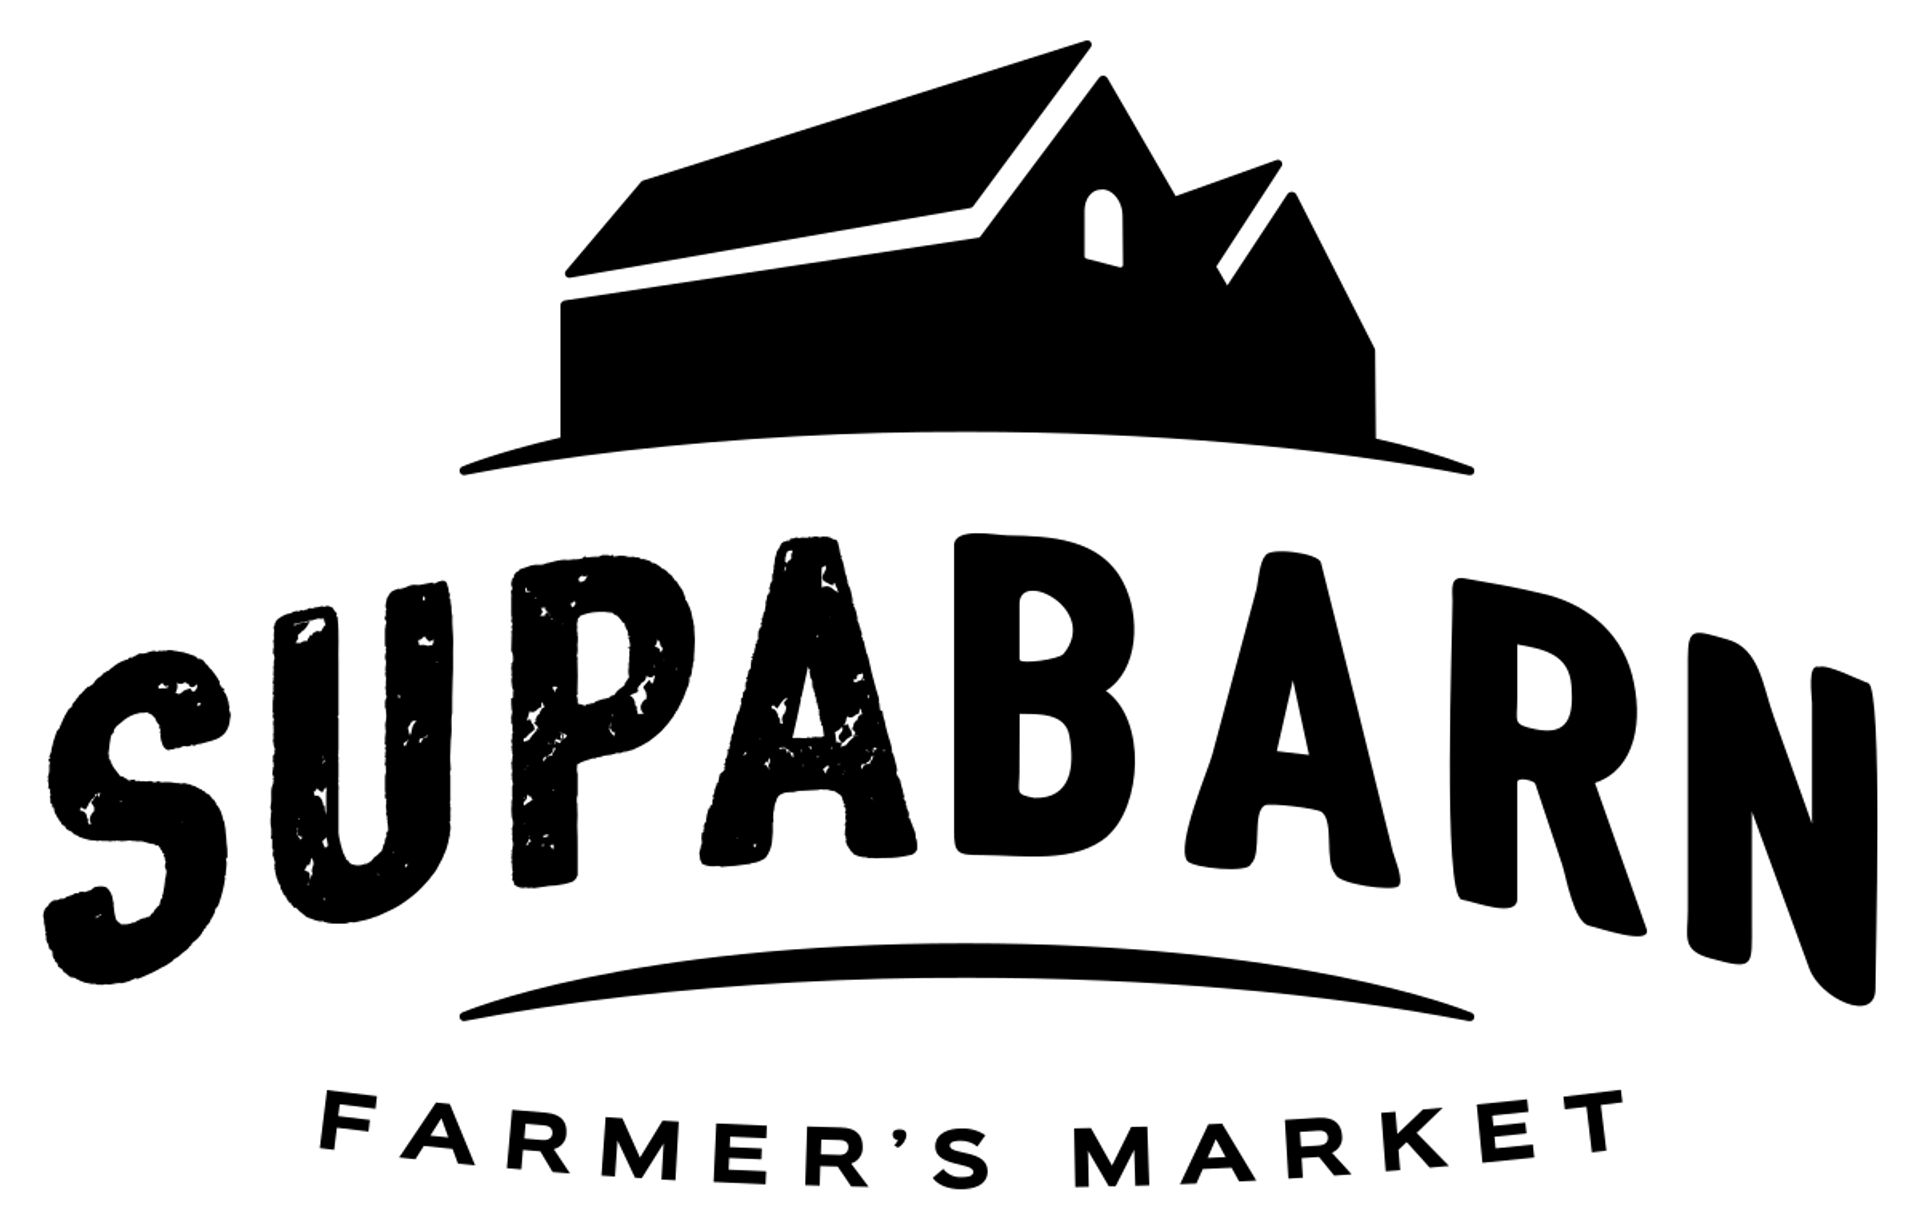 SUPABARN logo of current flyer